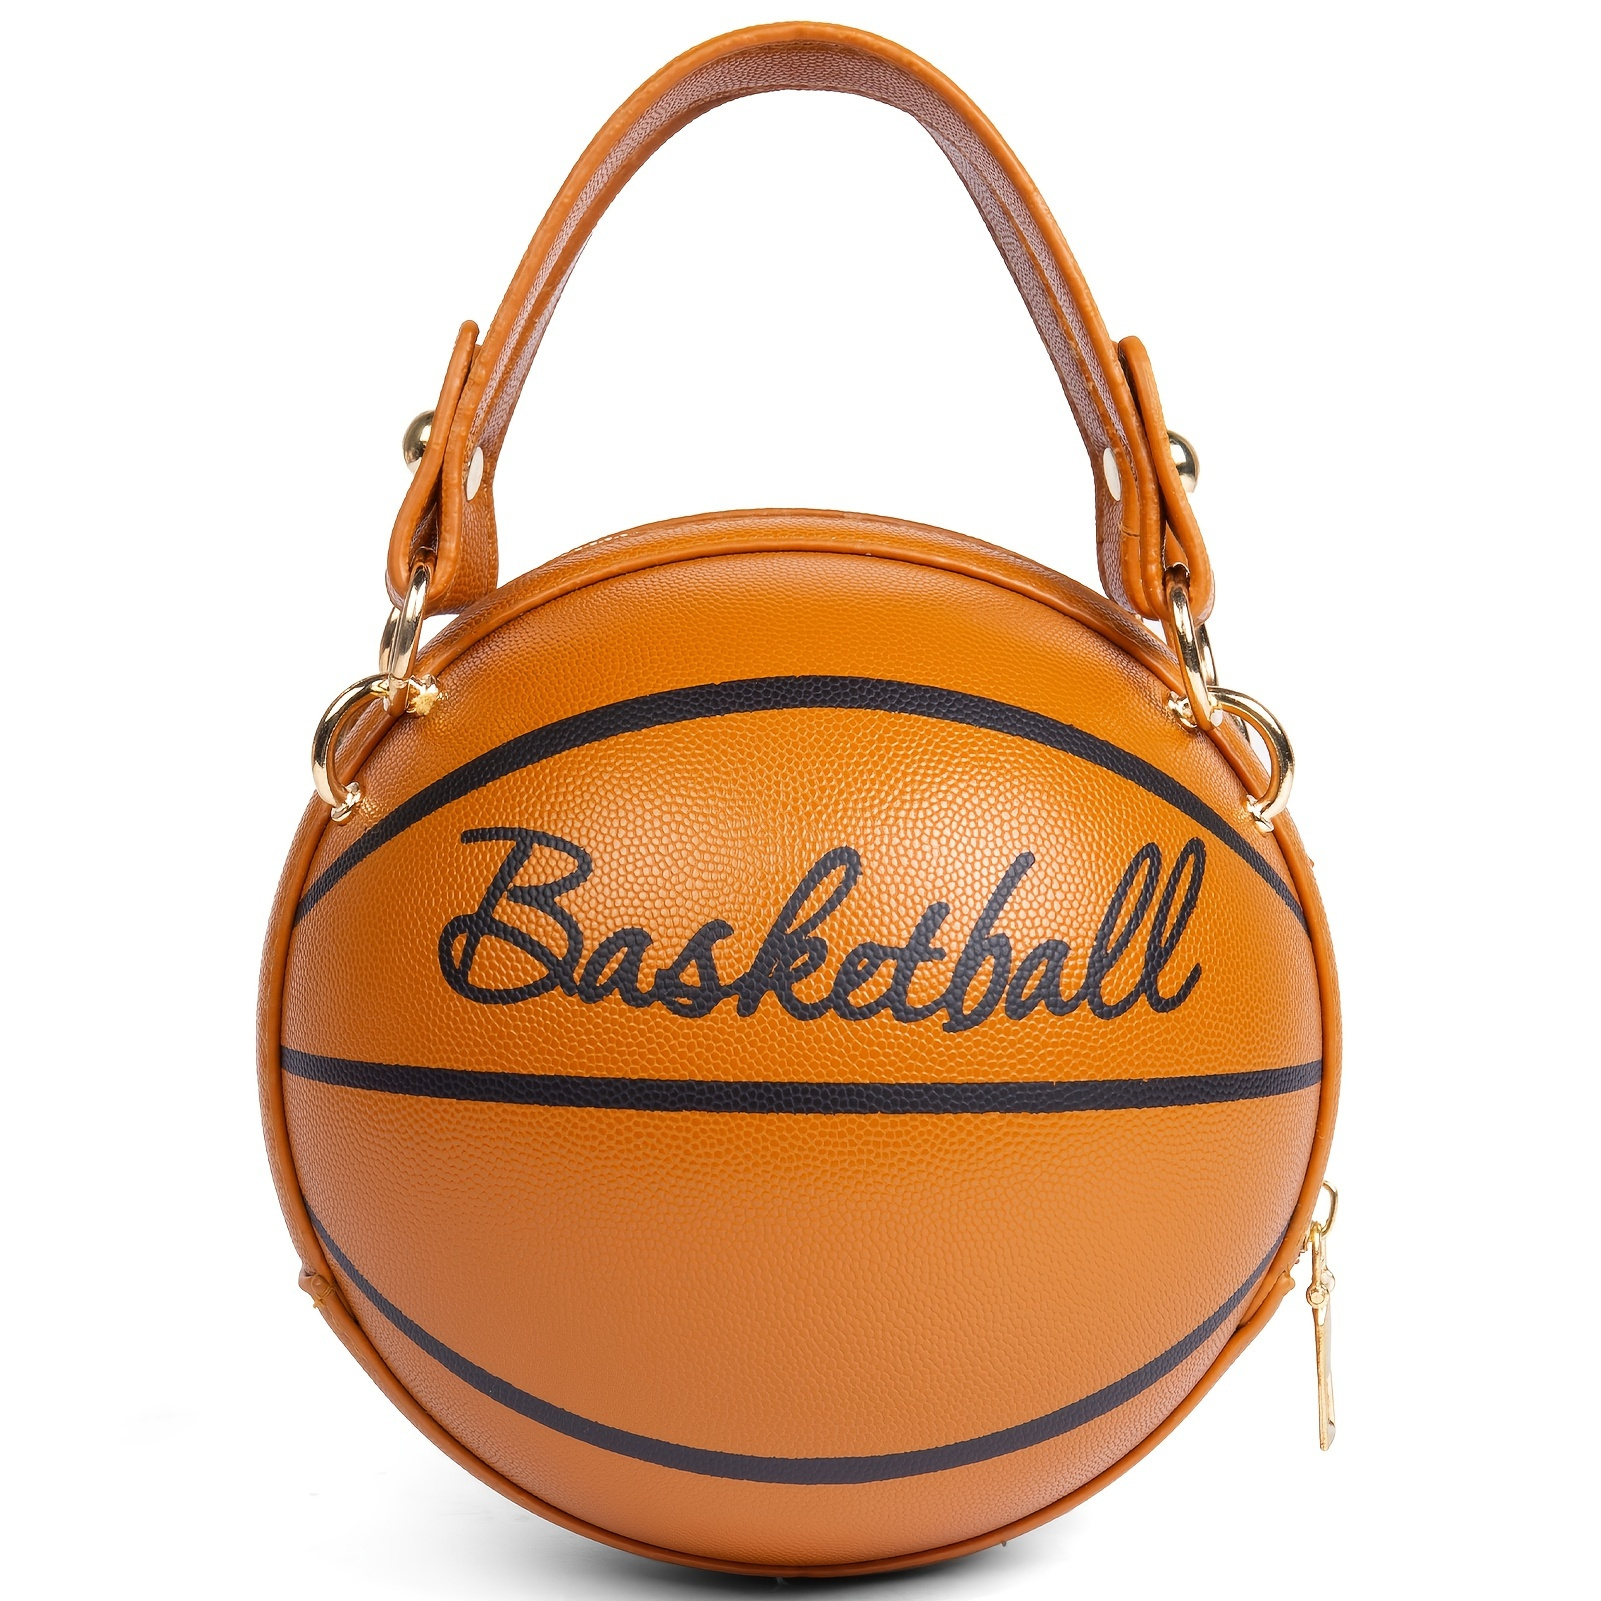 Baseball Leather Fabric, Football Leather Material - China Leather  Basketball and Basketball Leather price